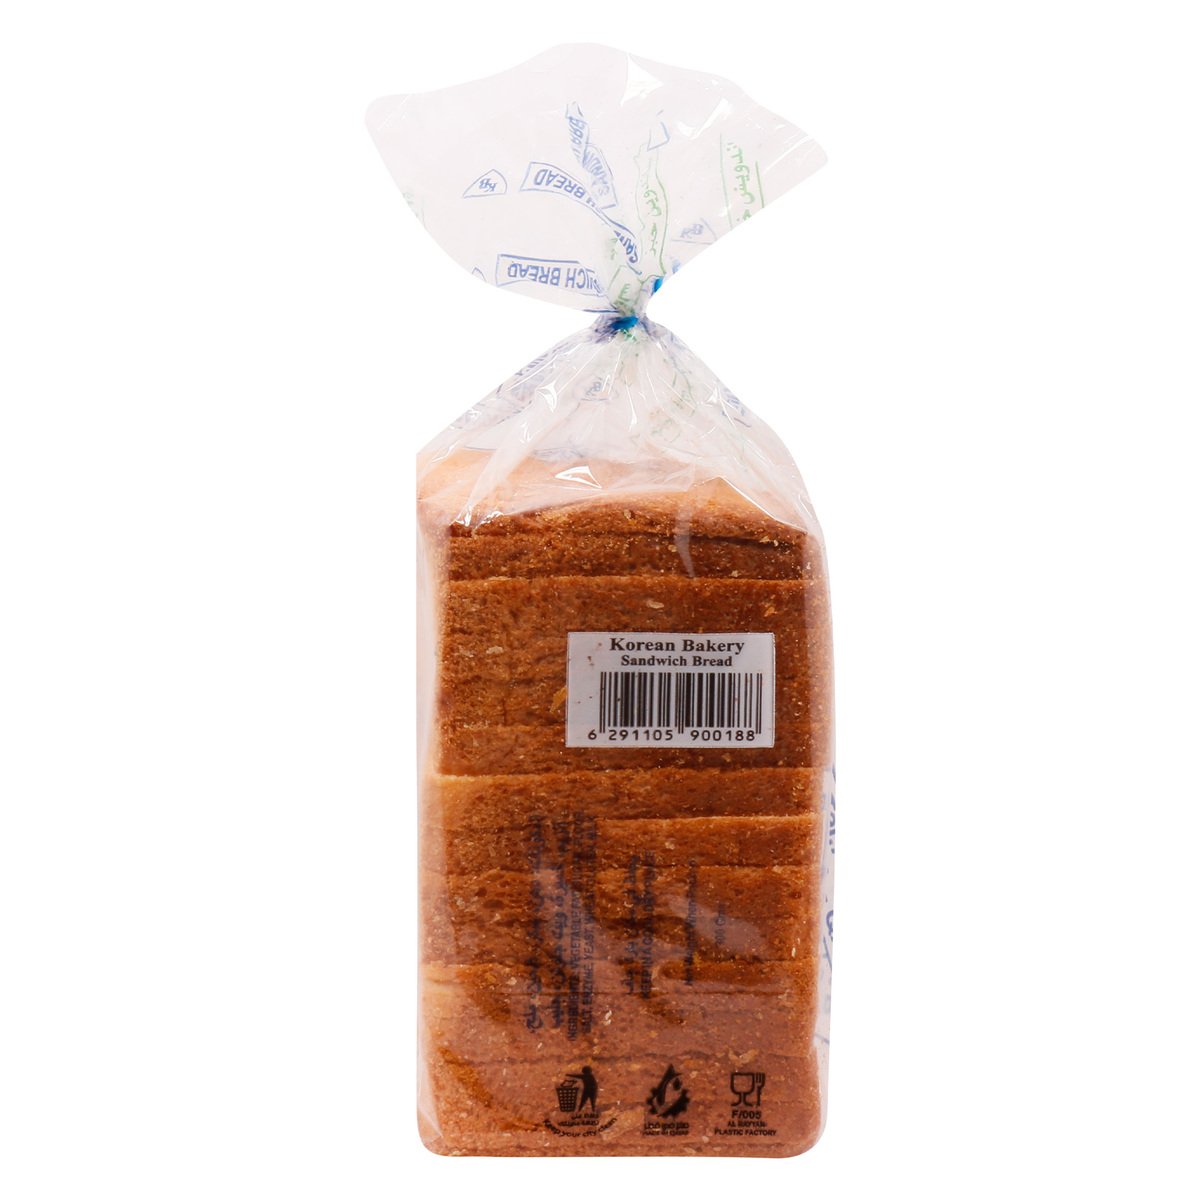 Korean Bakeries Sandwich Bread 300g